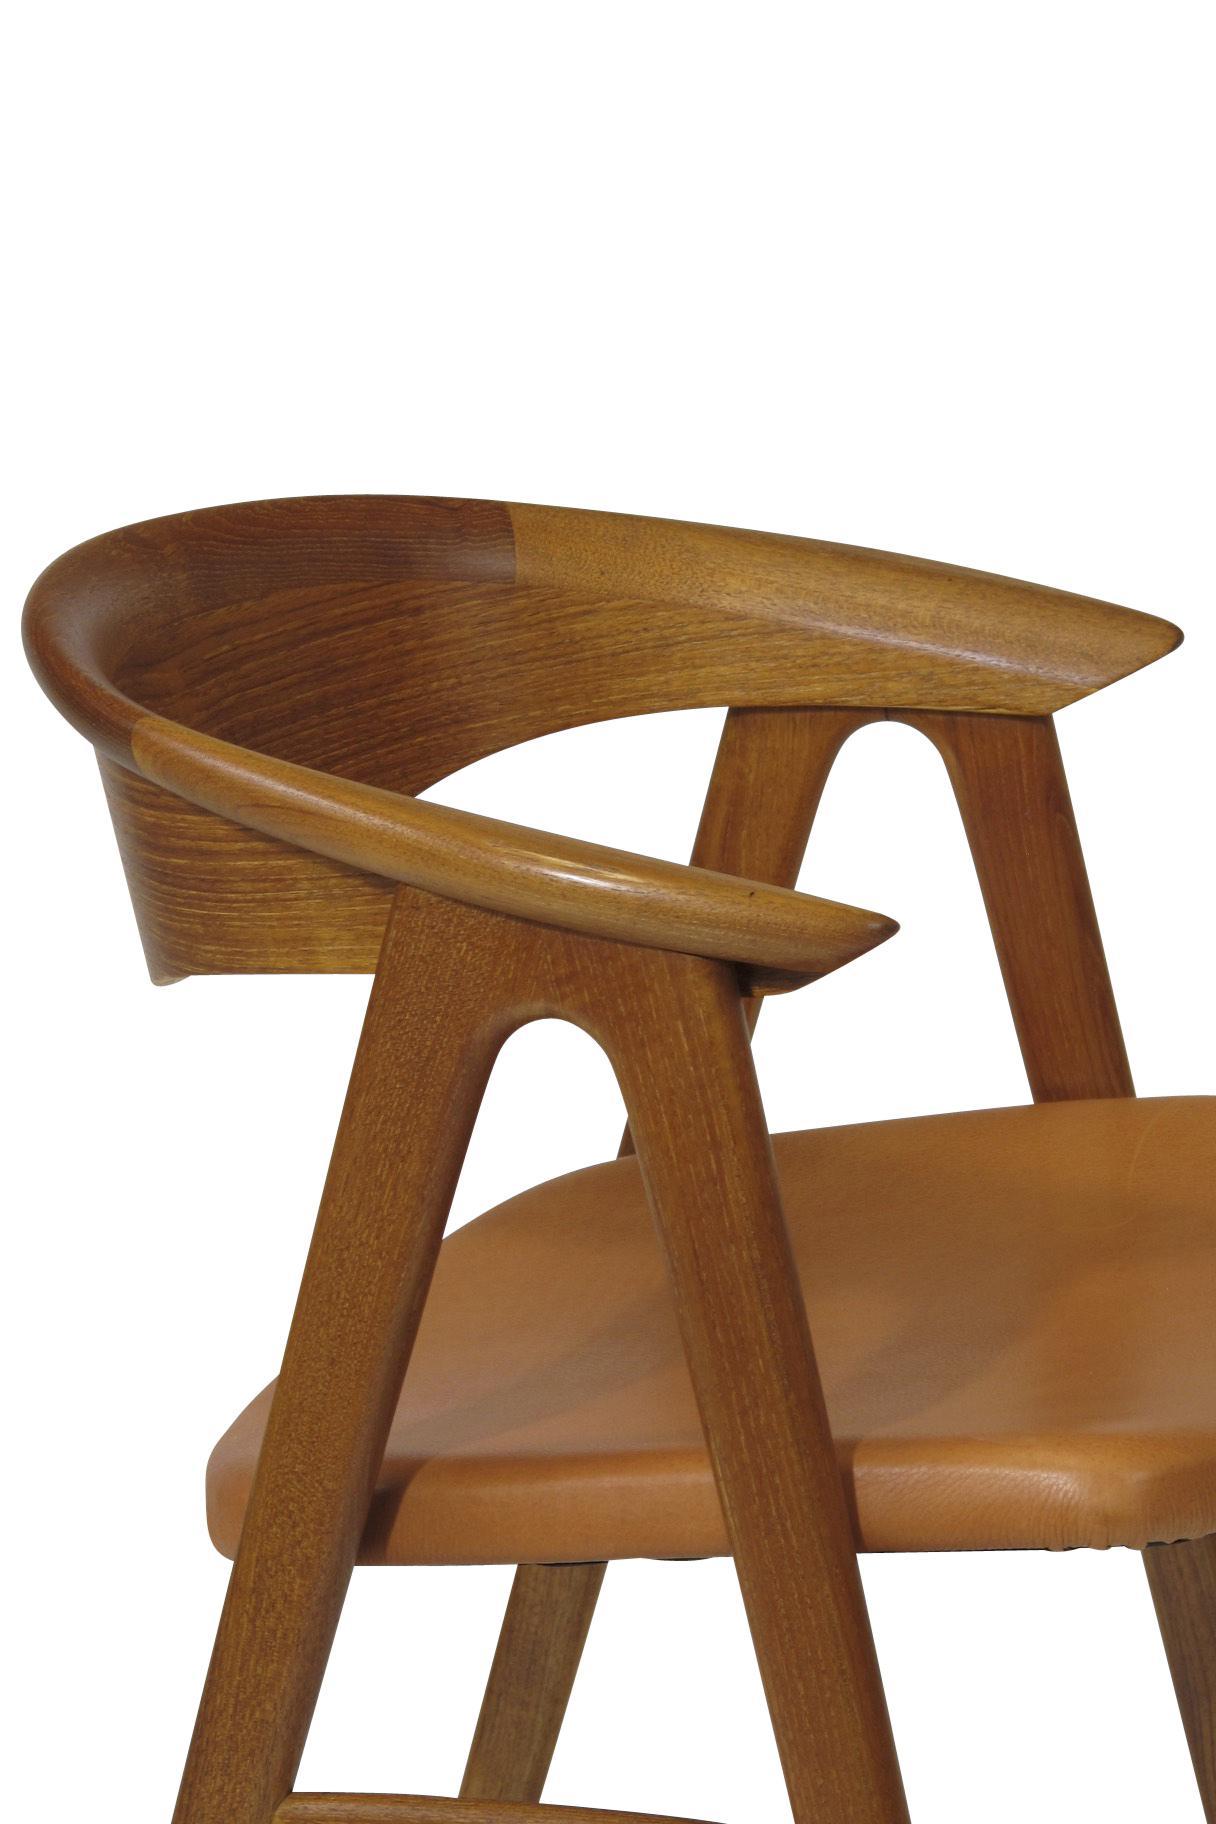 Scandinavian Modern Erik Kirkegaard Danish Teak Dining Chairs in Saddle Leather